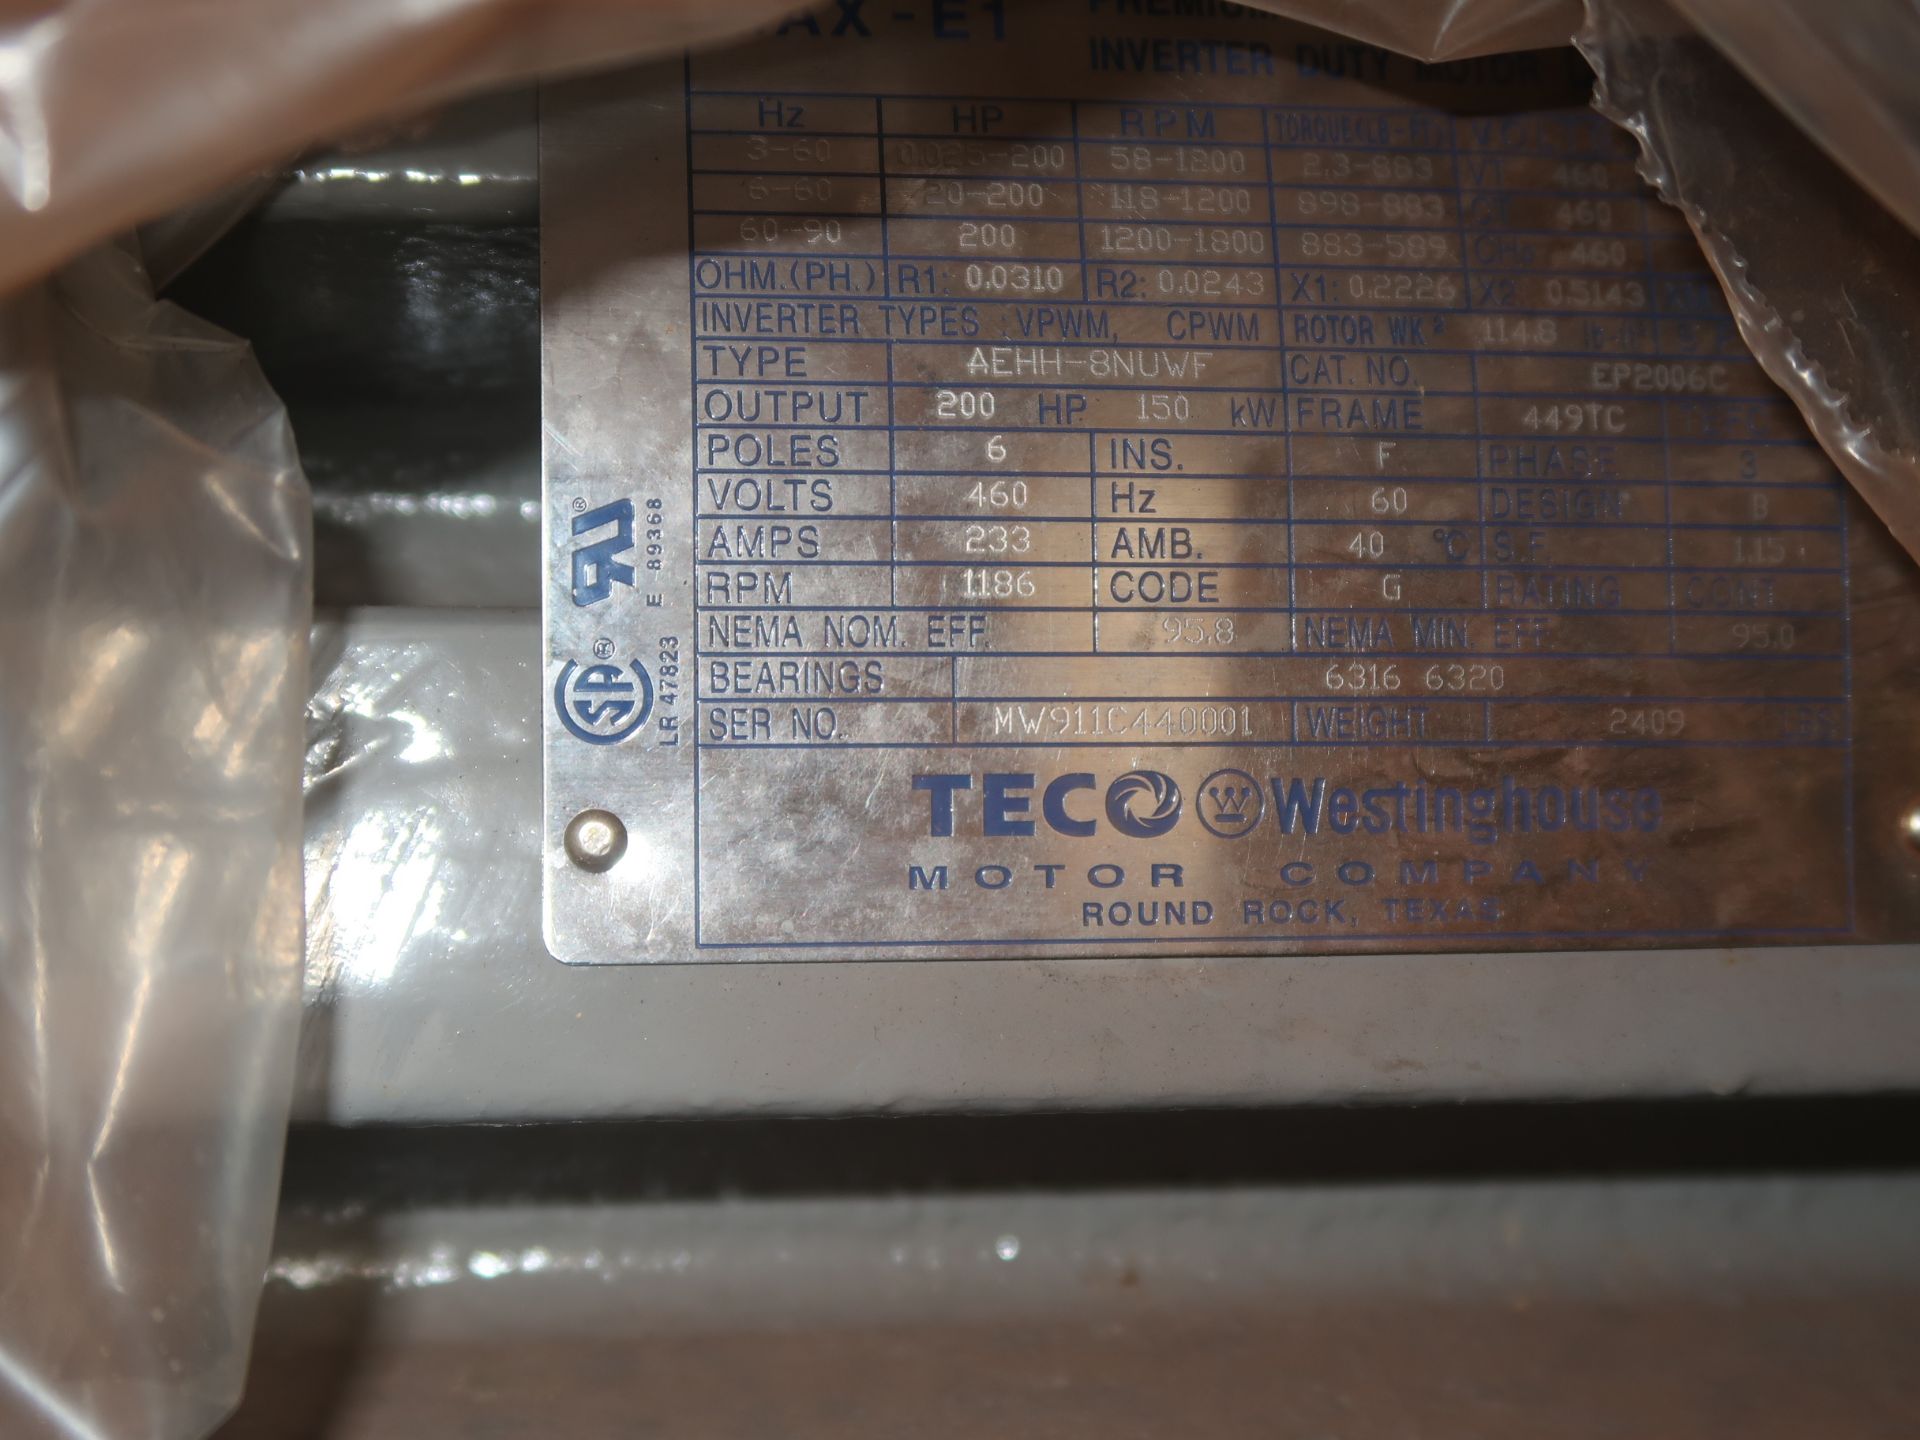 Teco 200 HP inverter motor - Image 3 of 3